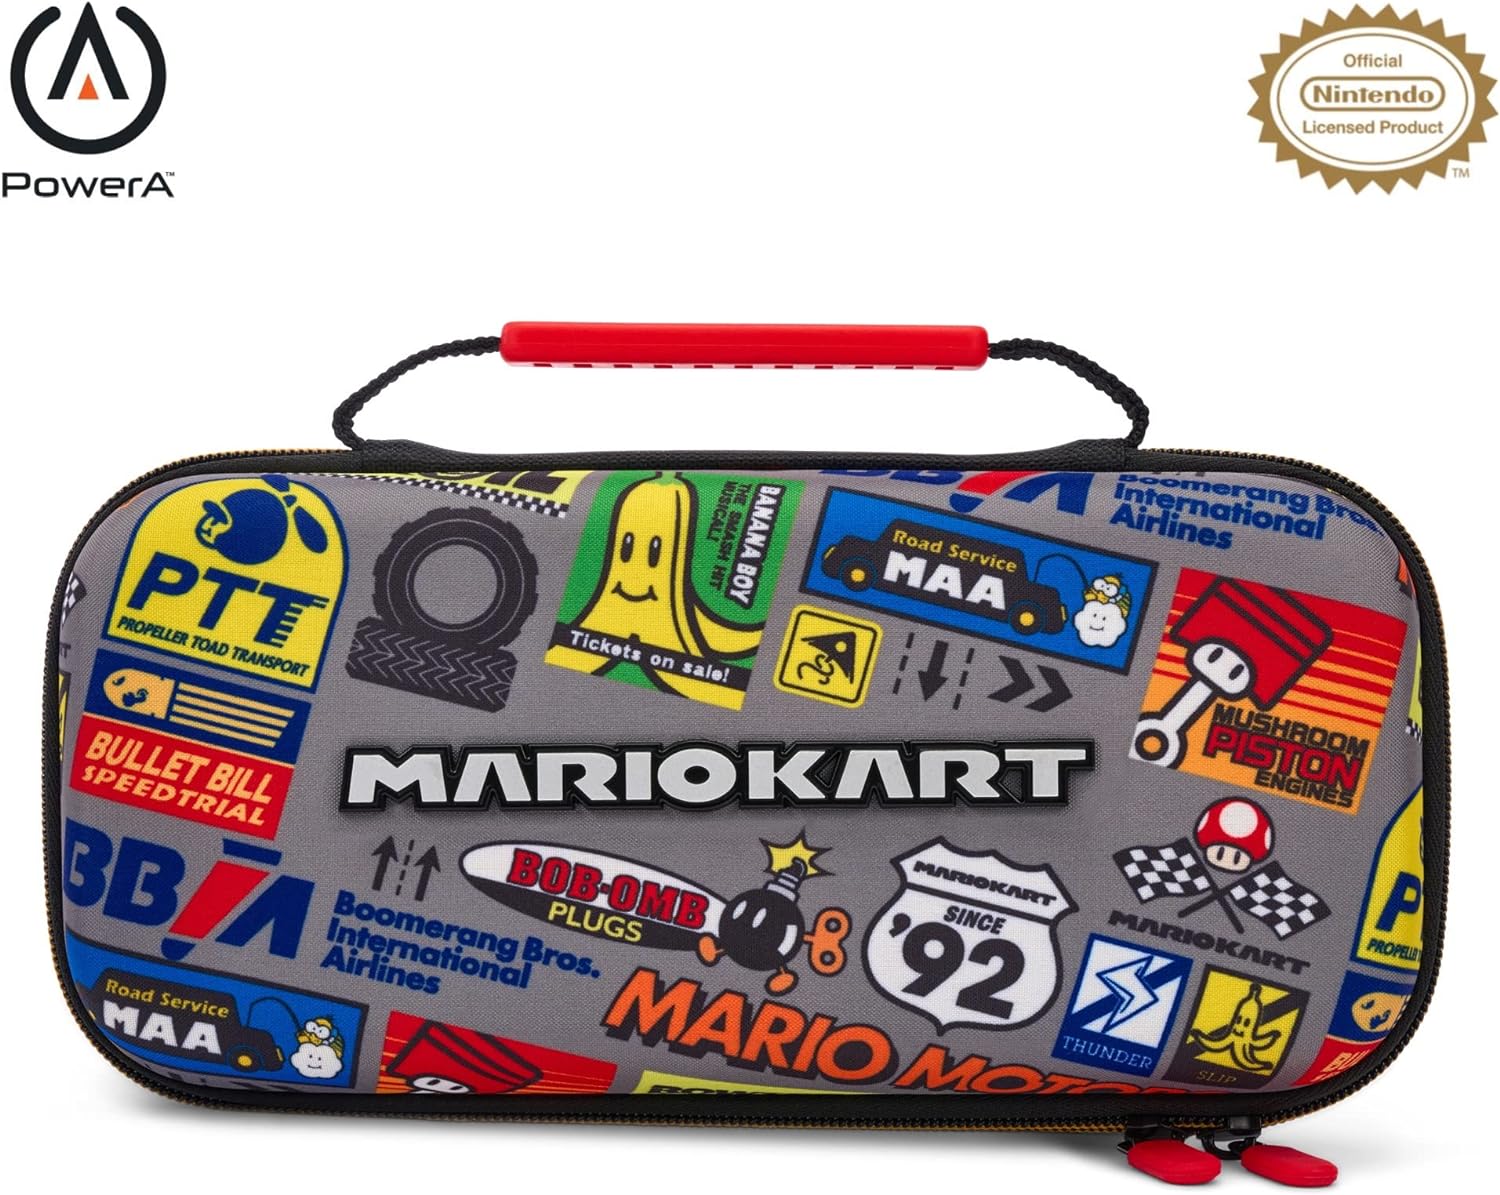 PowerA estuche de viaje para Nintendo Switch – Mario Kart